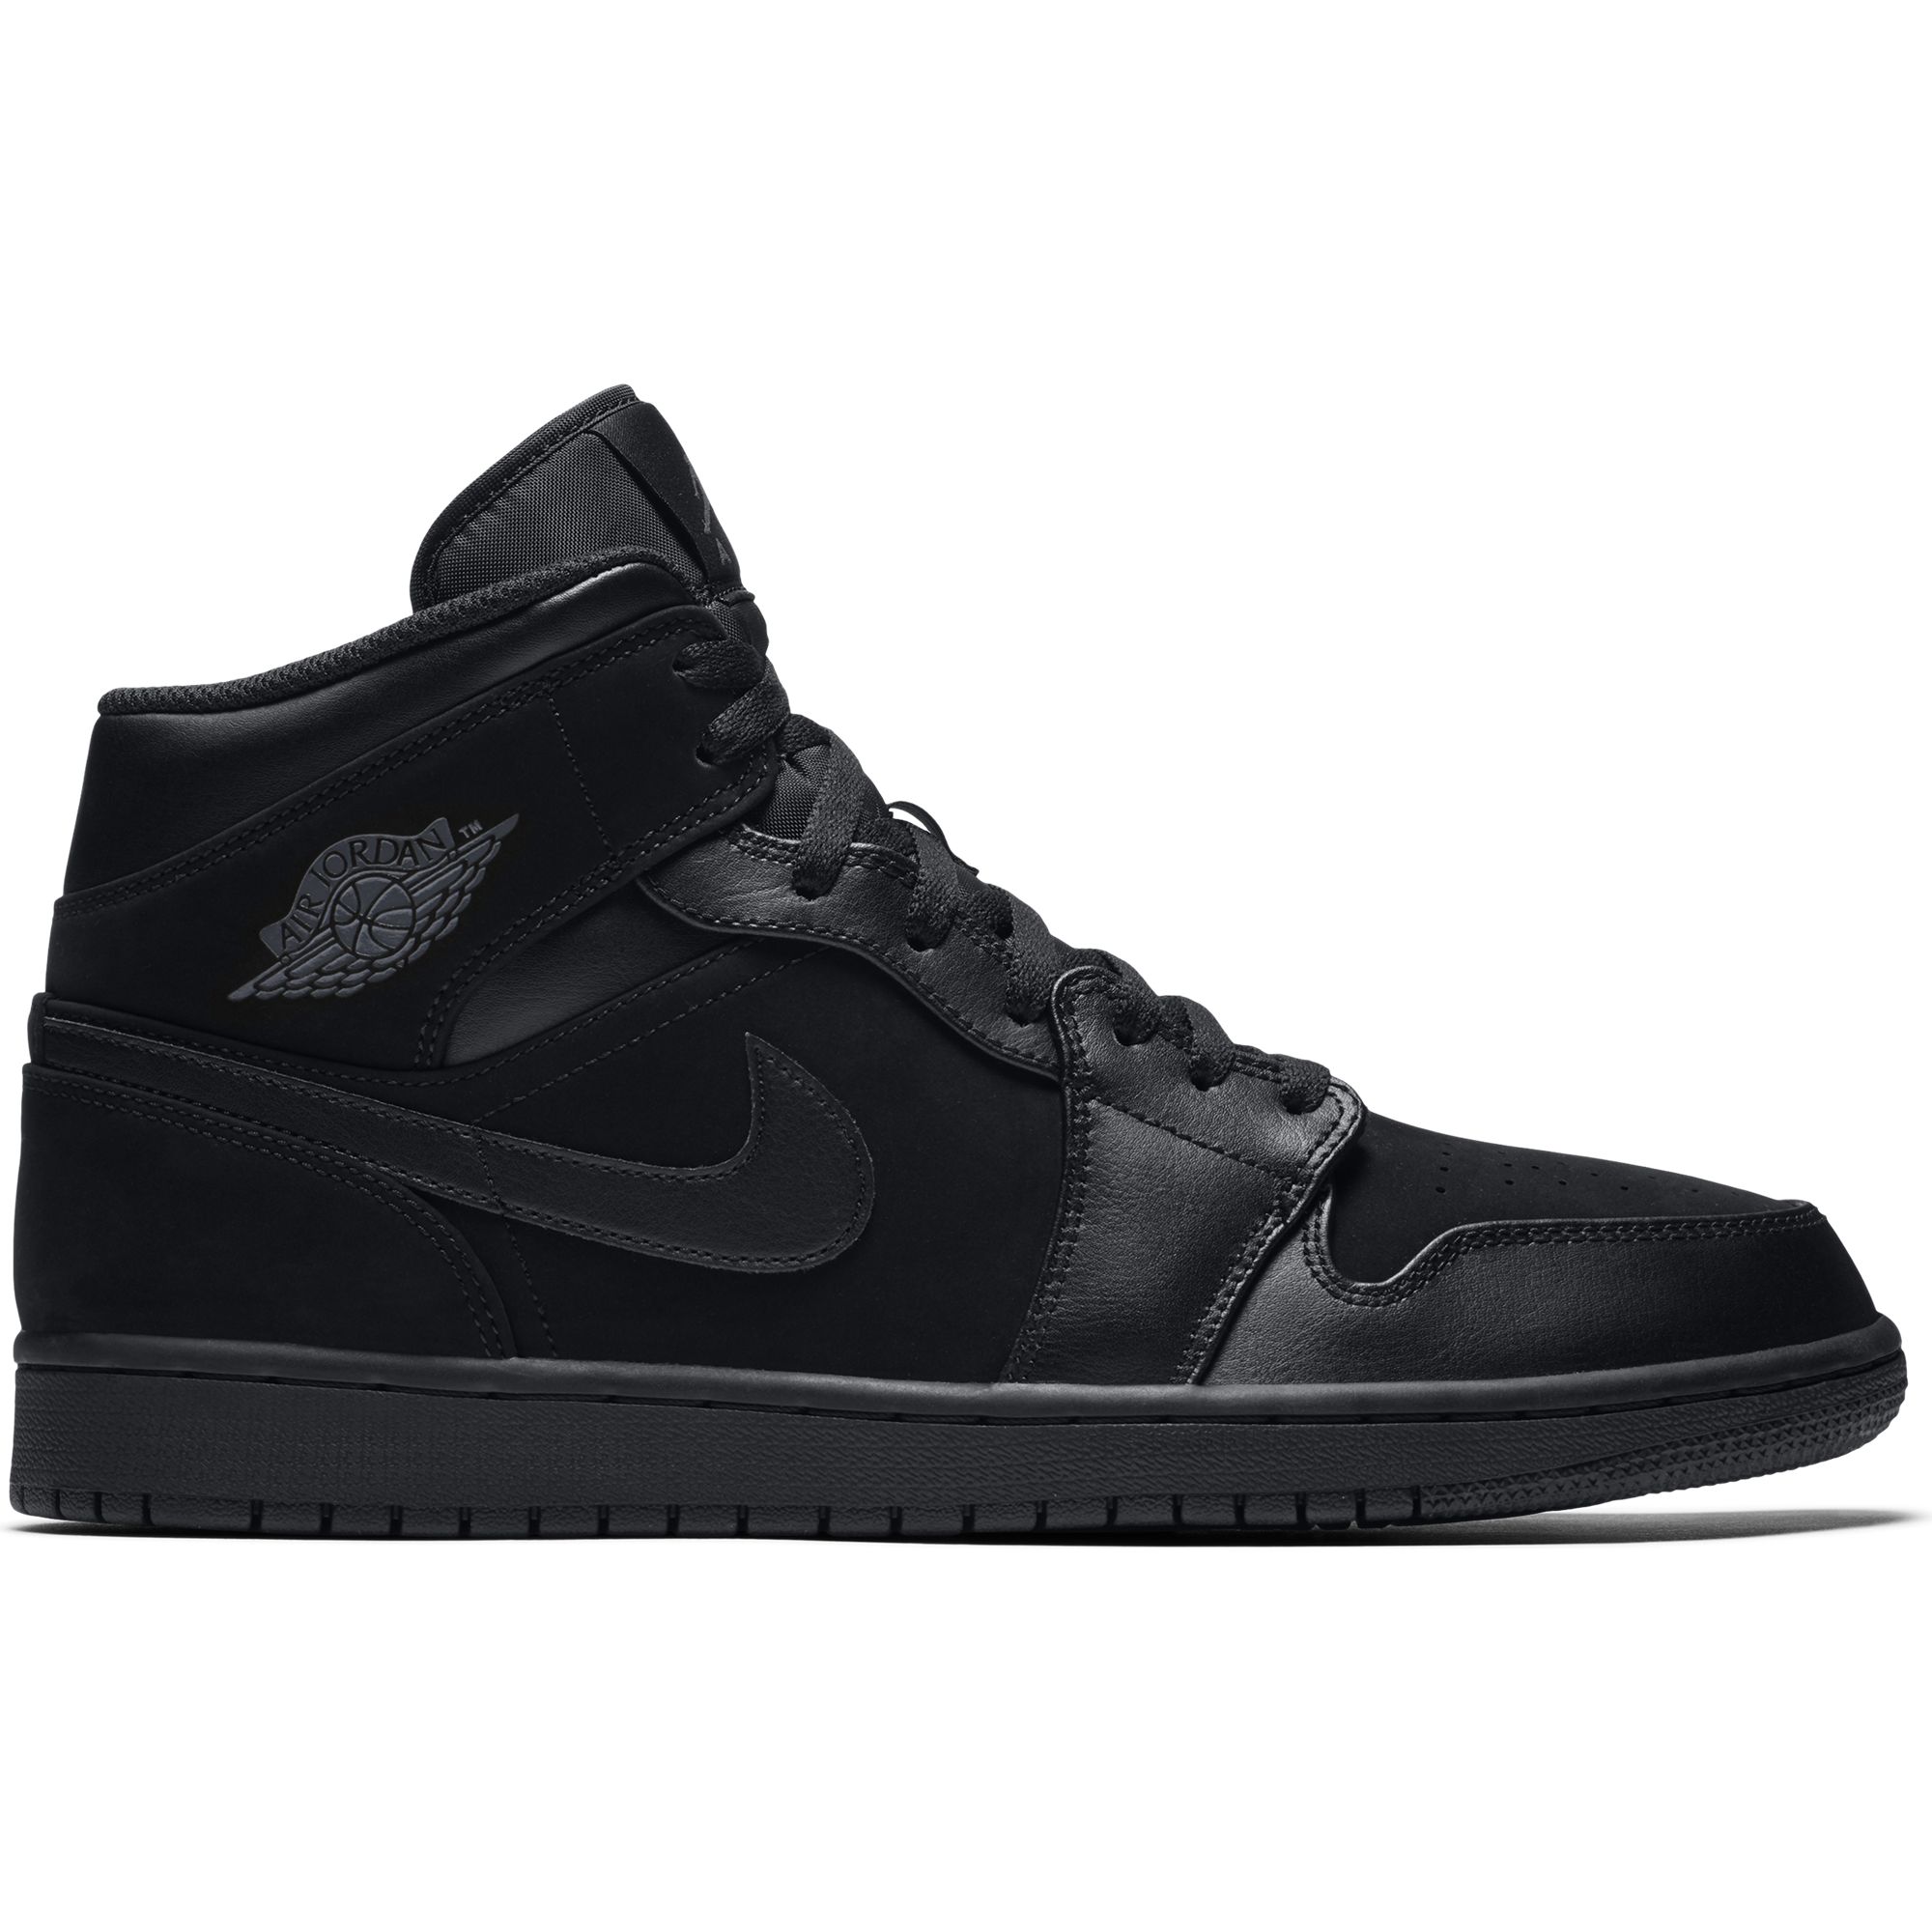 Джорданы 1 черные. Air Jordan 1 Mid Black. Nike Air Jordan 1 Mid Black. Nike Air Jordan 1 Mid. Nike Air Jordan 1 Black.